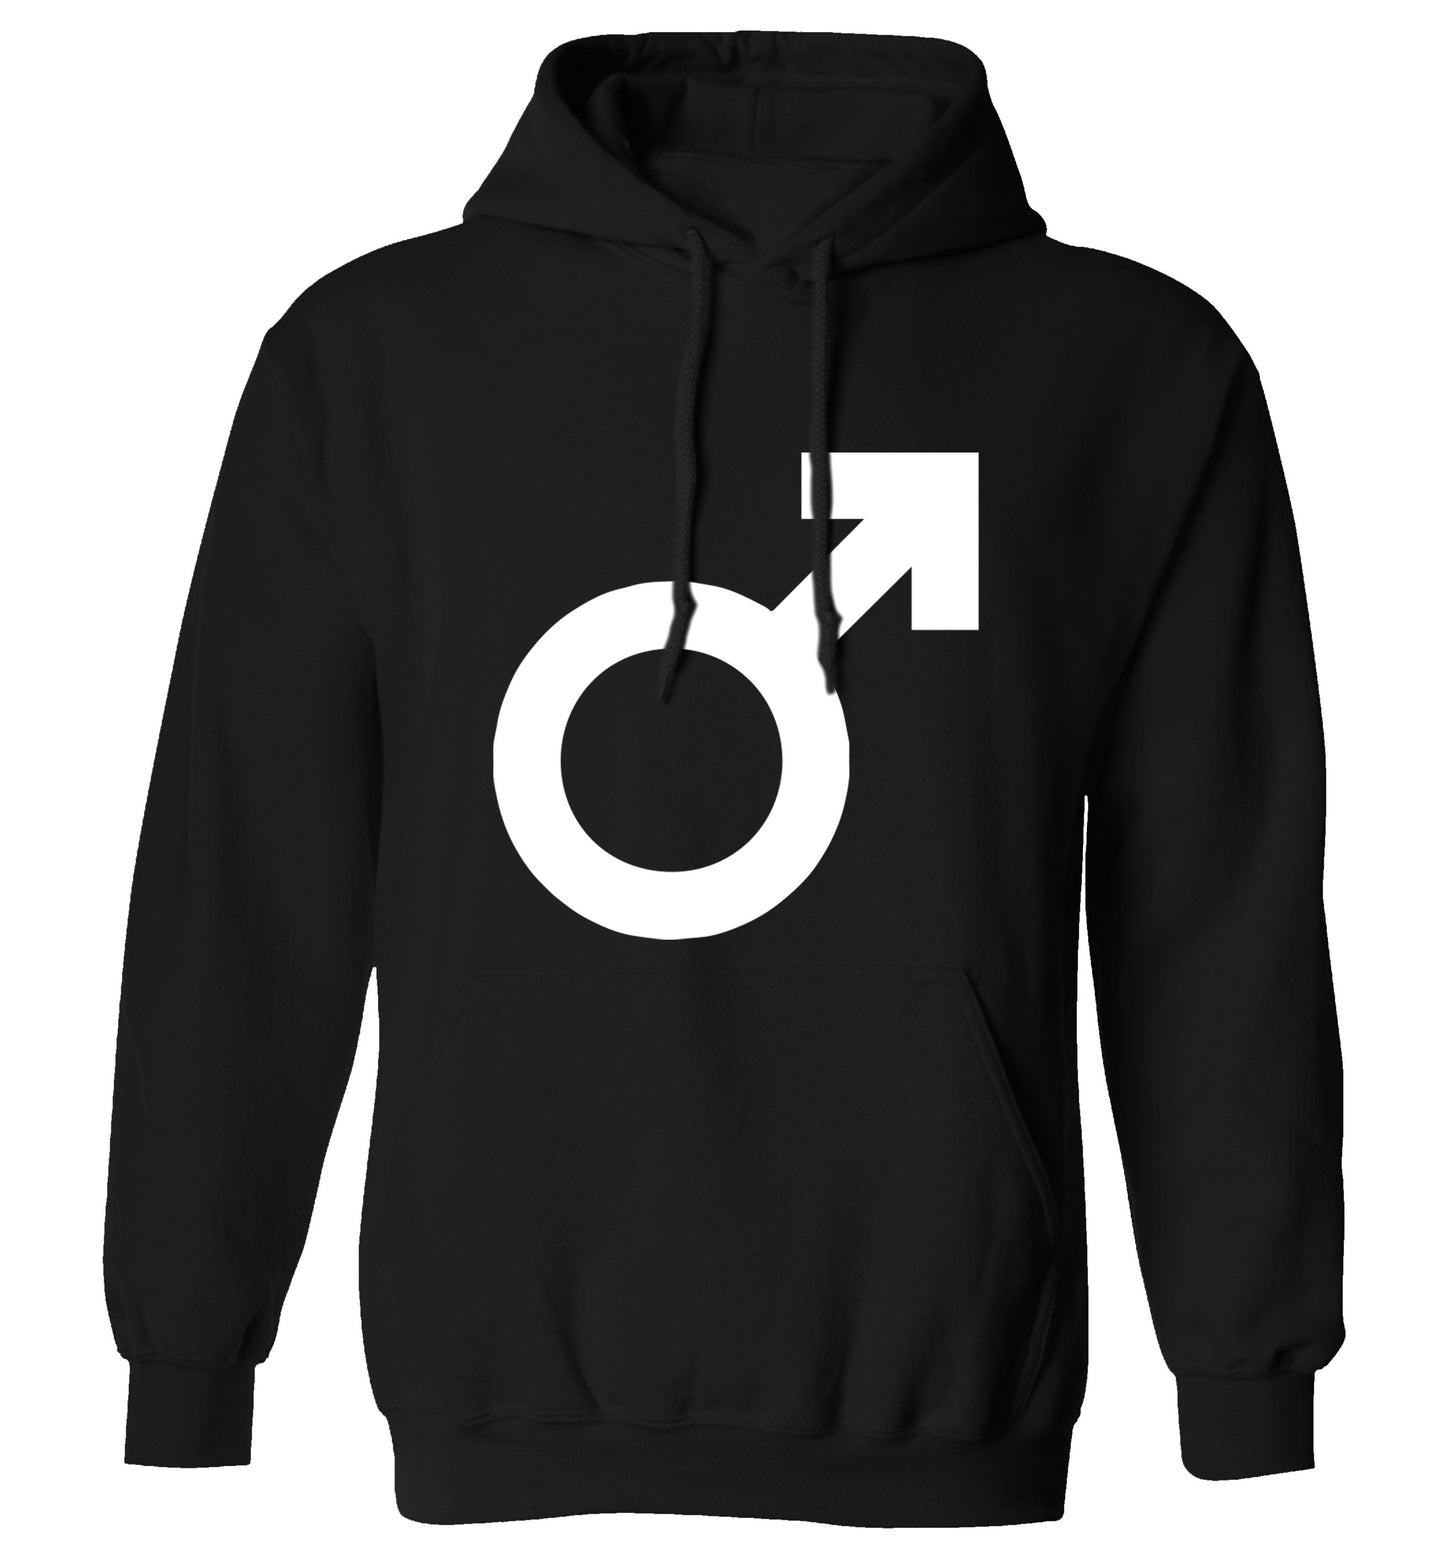 Male symbol large adults unisex black hoodie 2XL